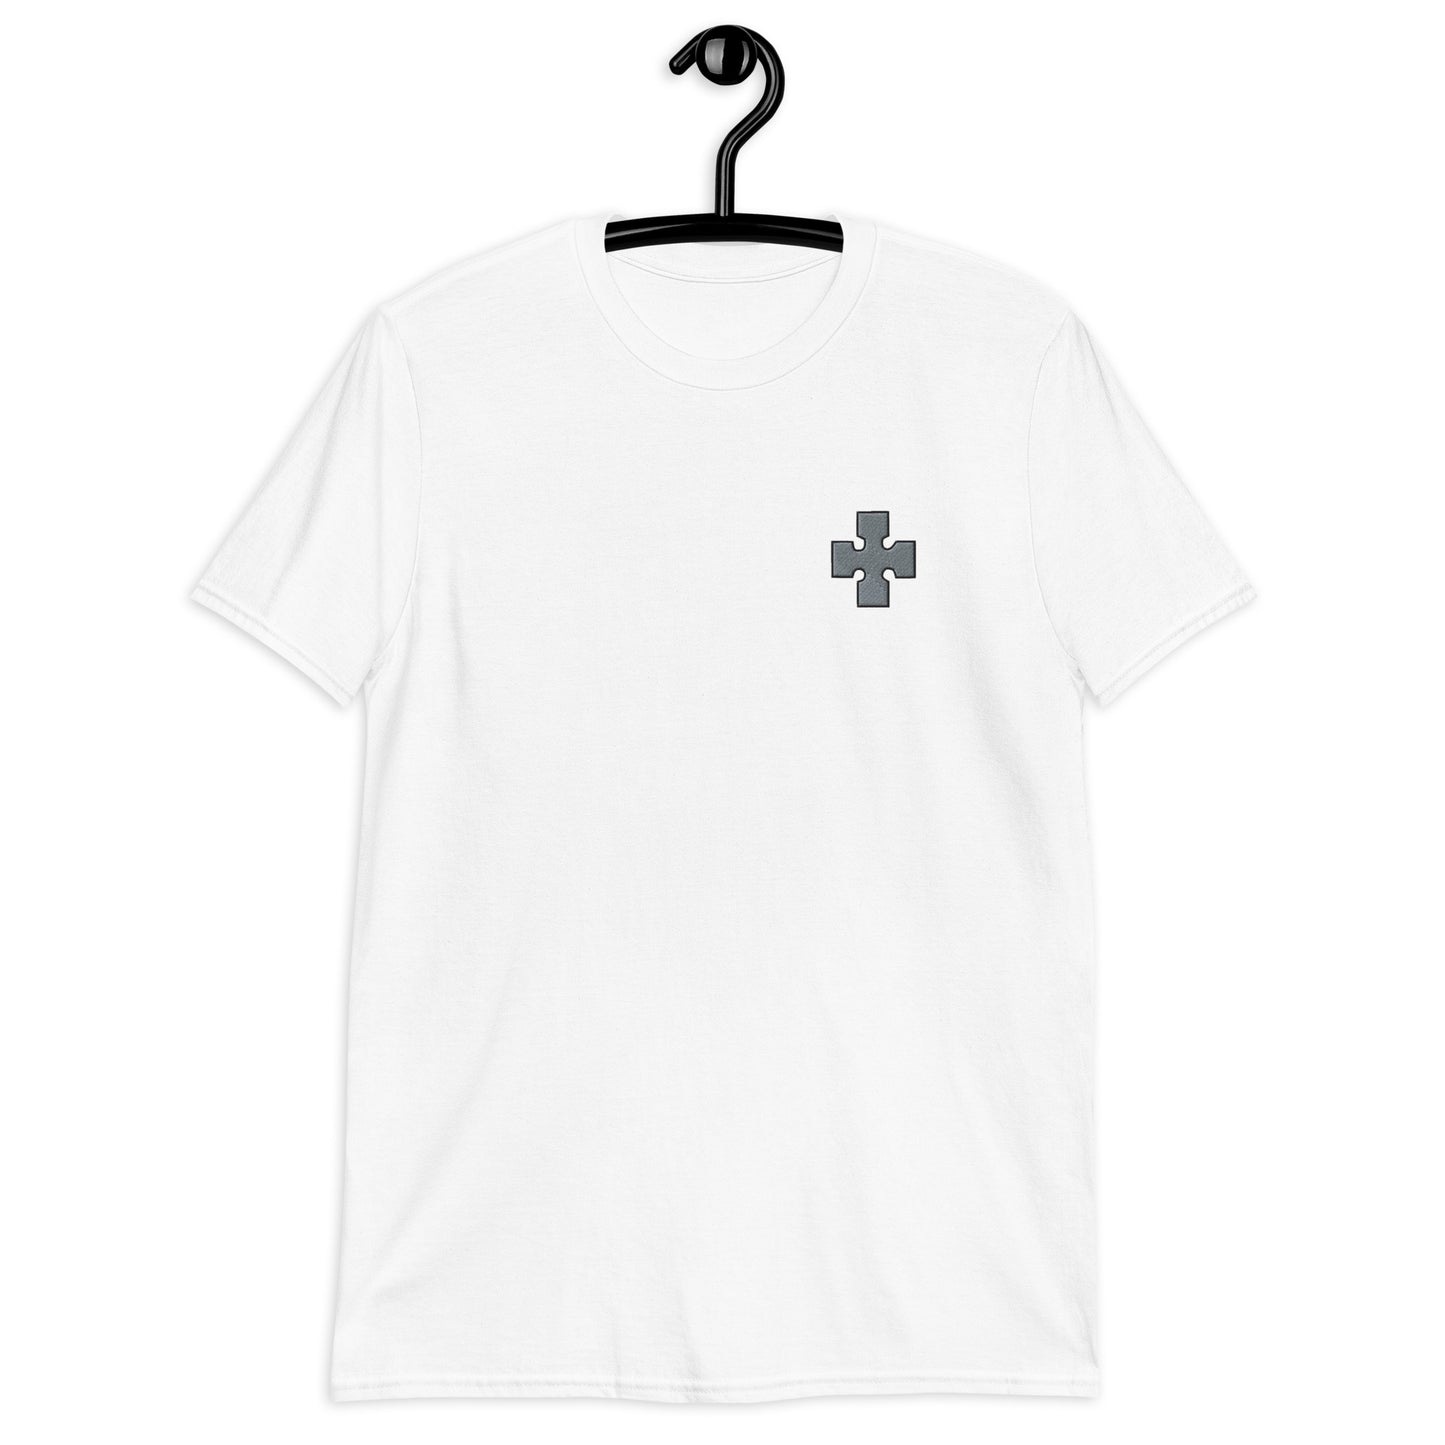 Embroidered Cross Short-Sleeve Unisex T-Shirt